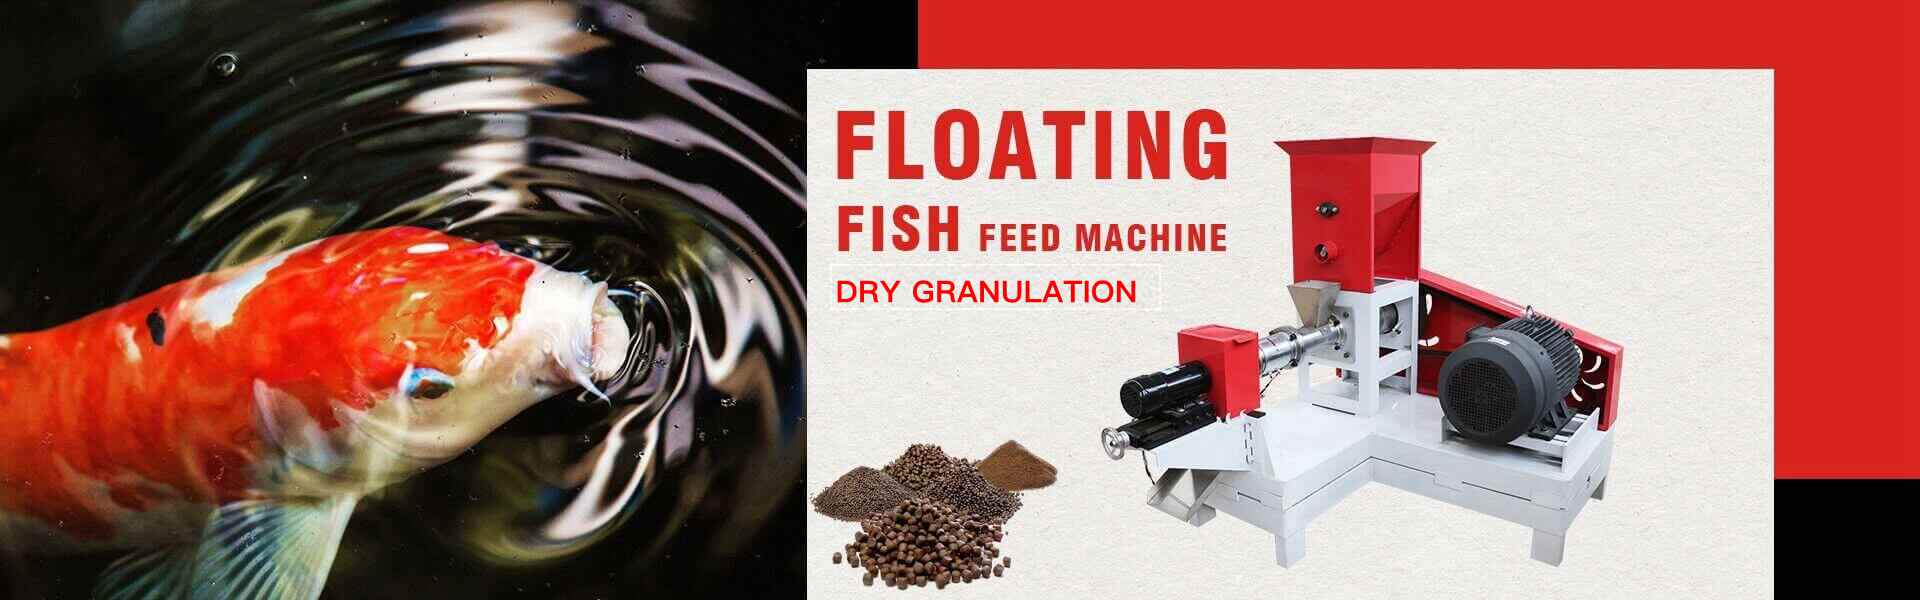 Floating fishi feed machine-Dry granulation